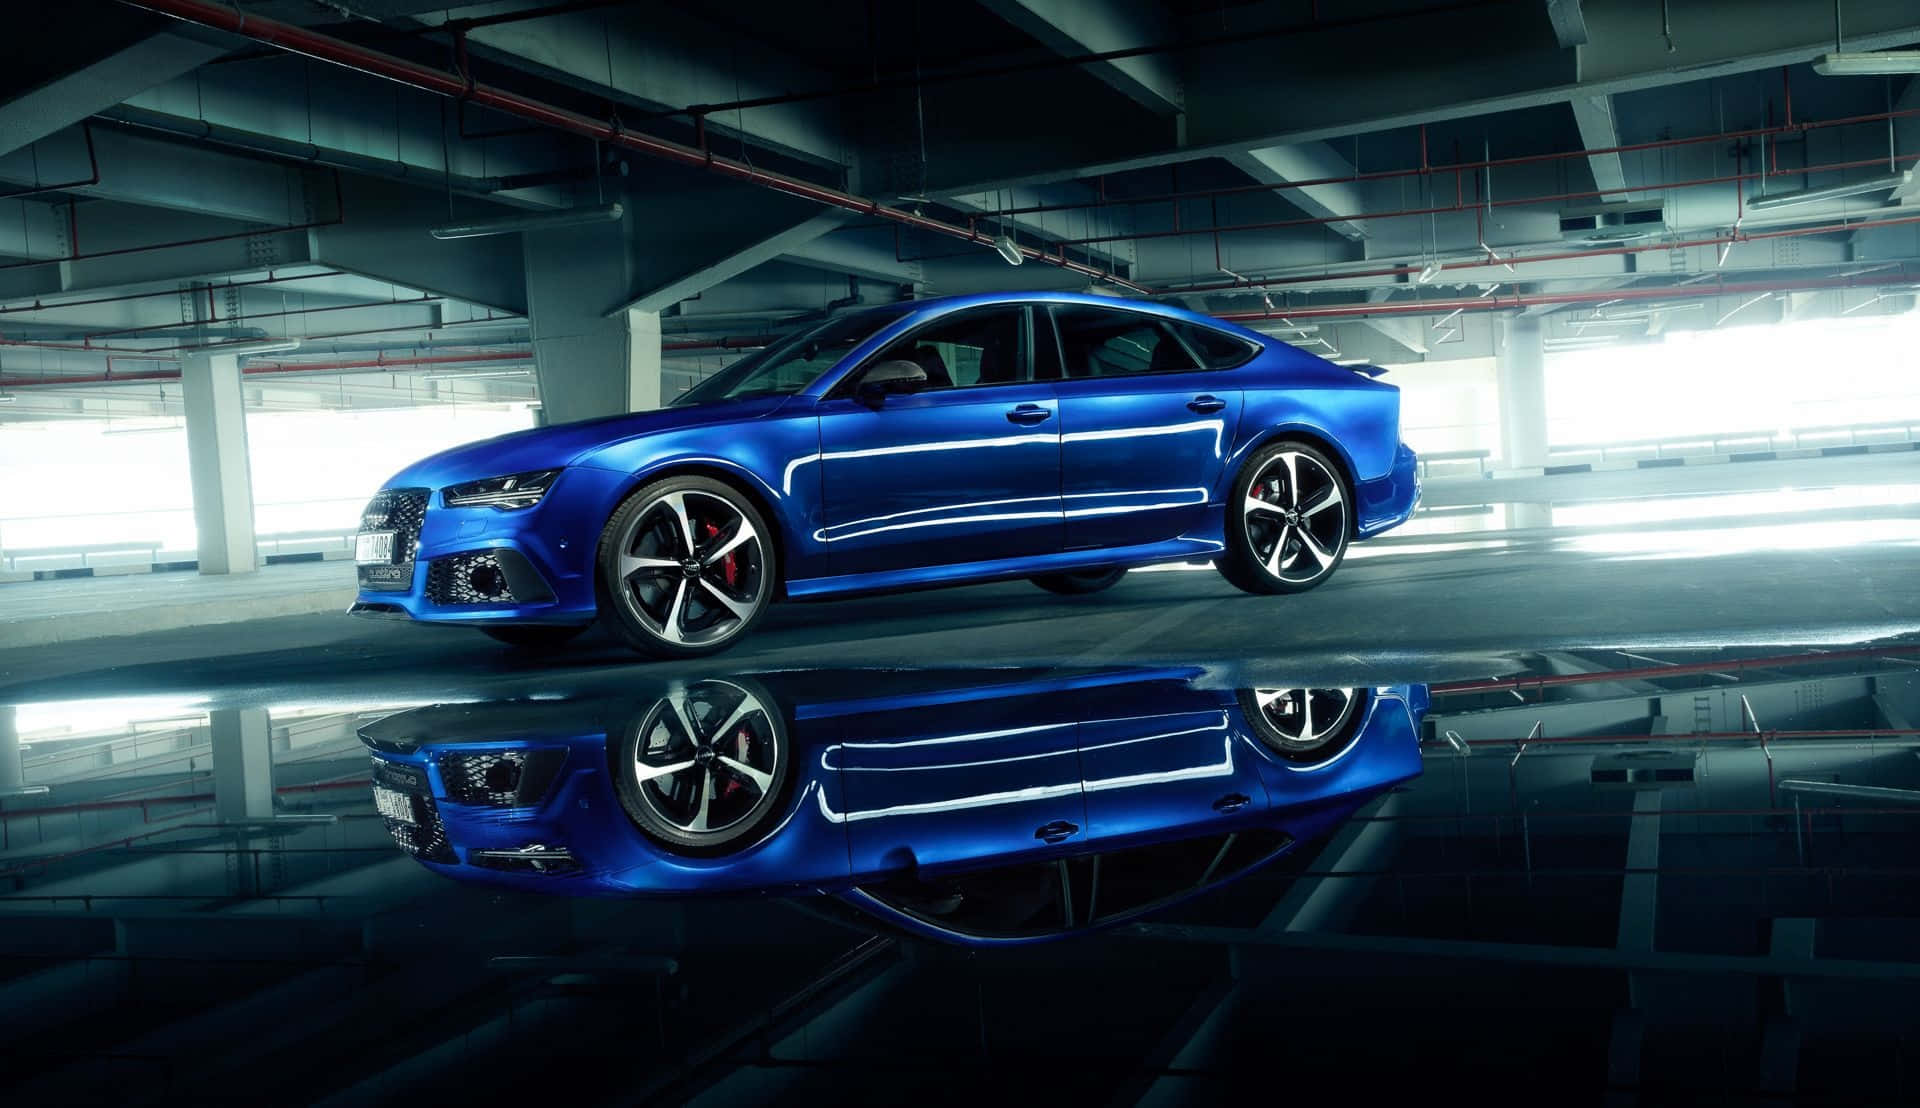 Dynamic Audi S7 in Action Wallpaper